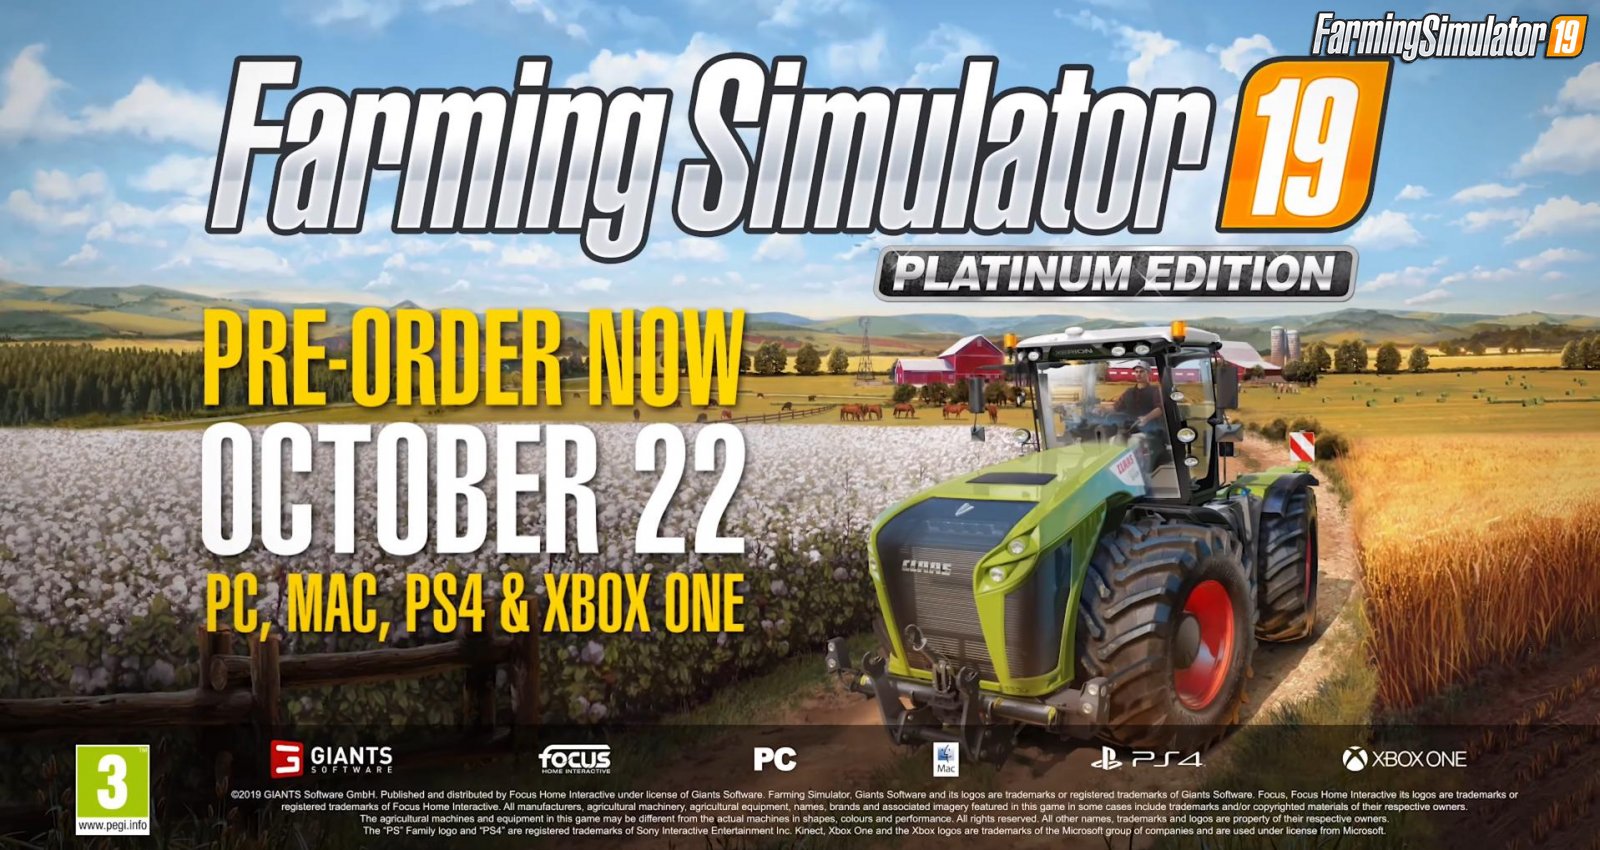 Farming Simulator 19 - Platinum Edition soon